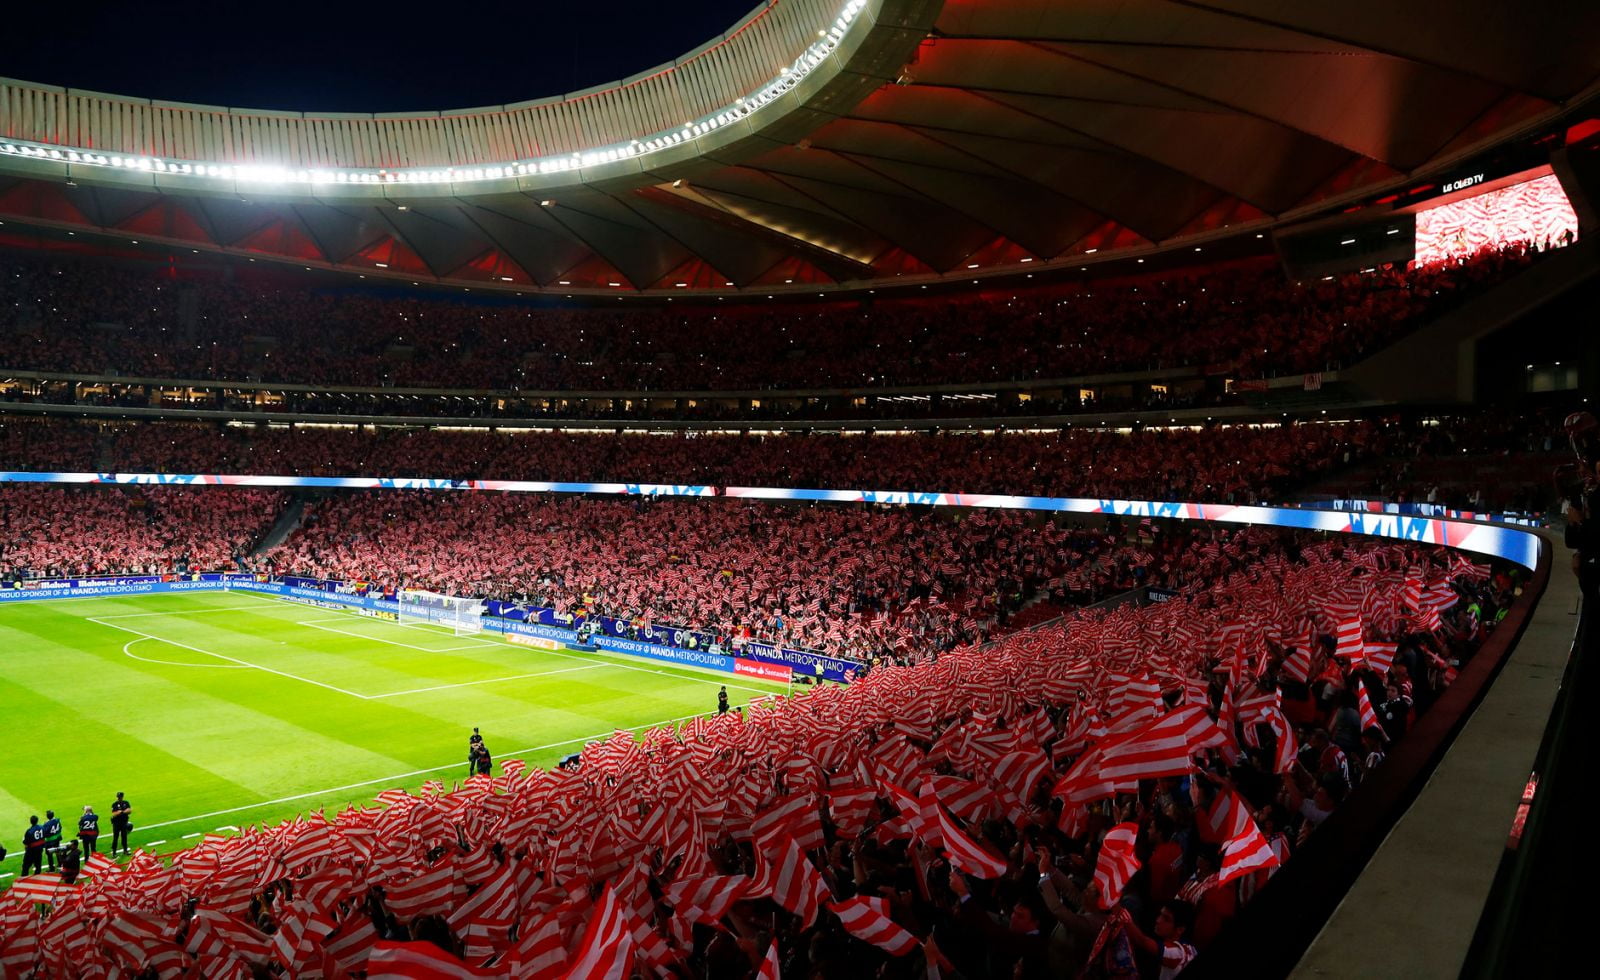 Atlético Madrid - Manchester United (CL), 3 februariom 21:00